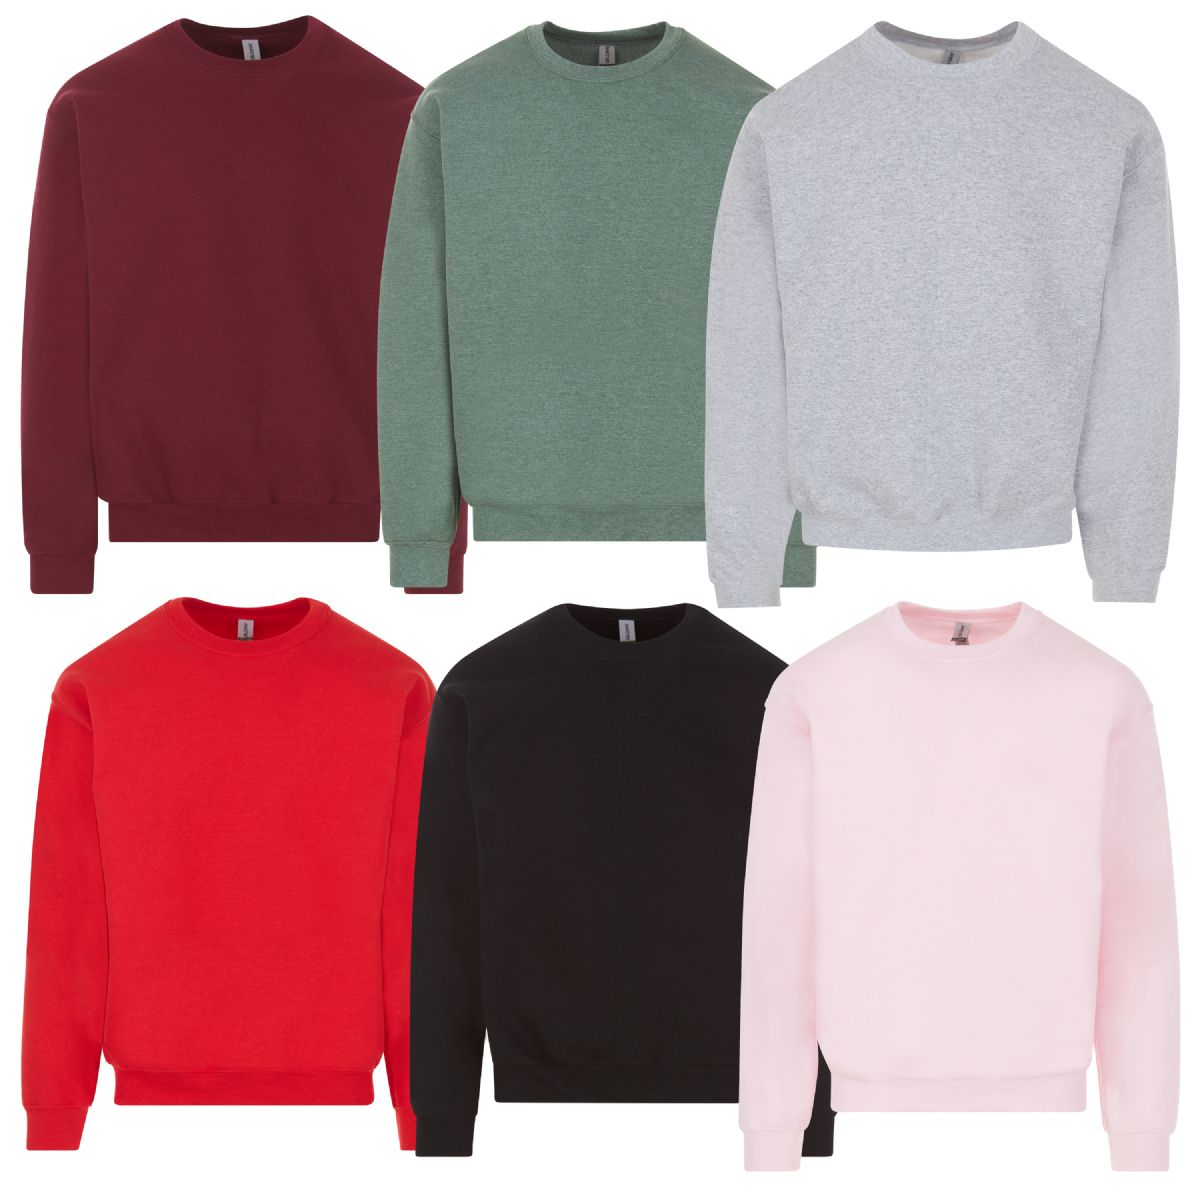 36 Pieces of Gildan Unisex Assorted Colors Fleece Sweat Shirts Size xl